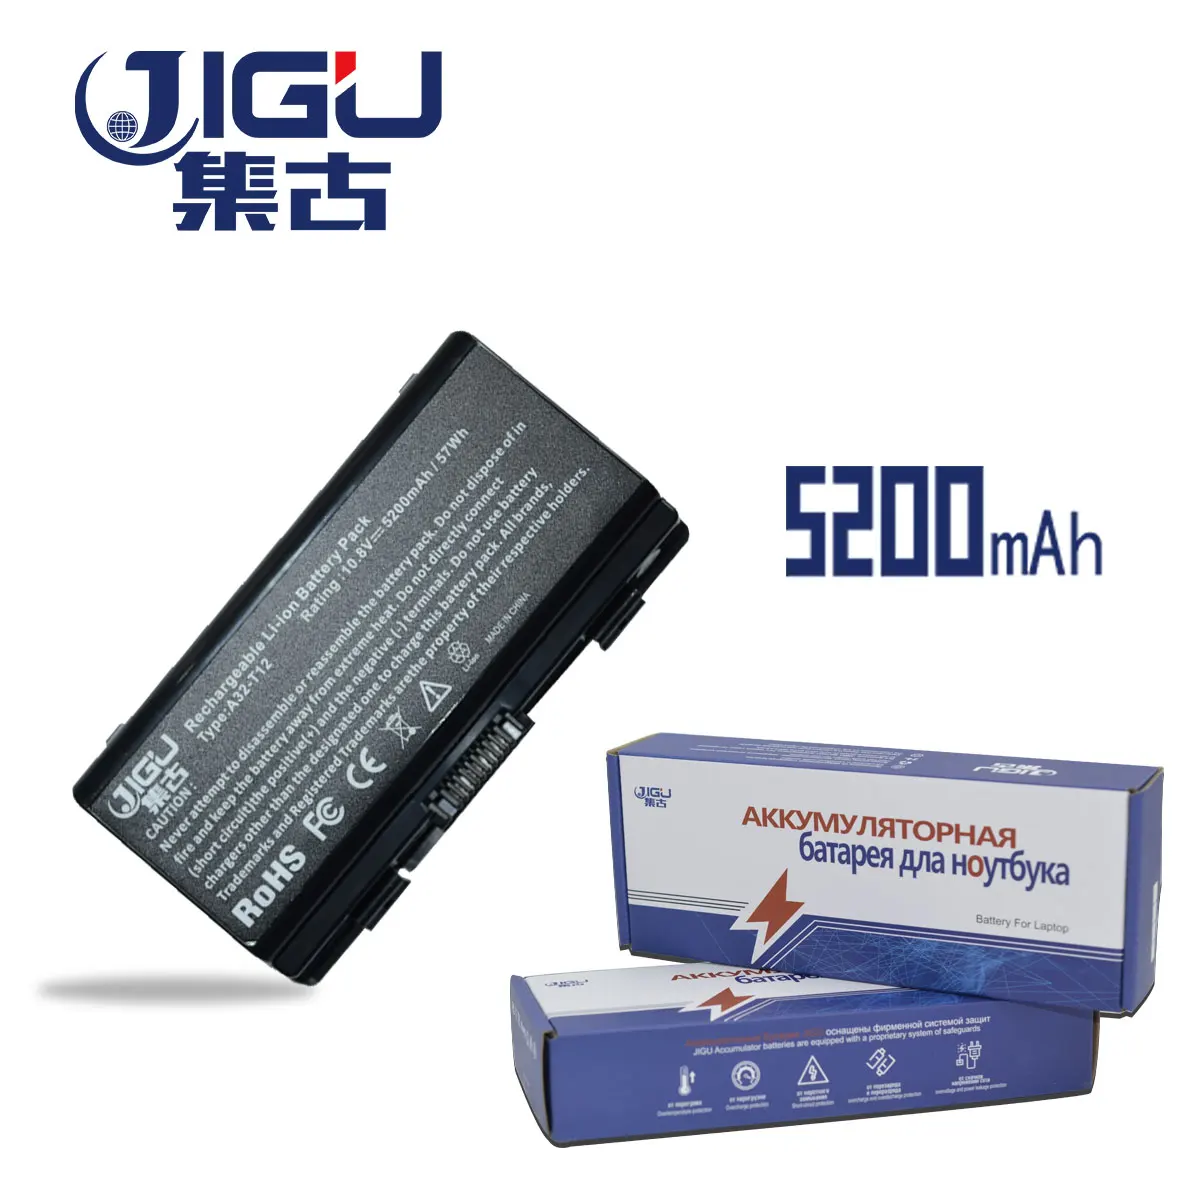 Аккумулятор JIGU для ноутбука Asus X51 Series 90 NQK1B1000Y 6 ячеек новая специальная цена